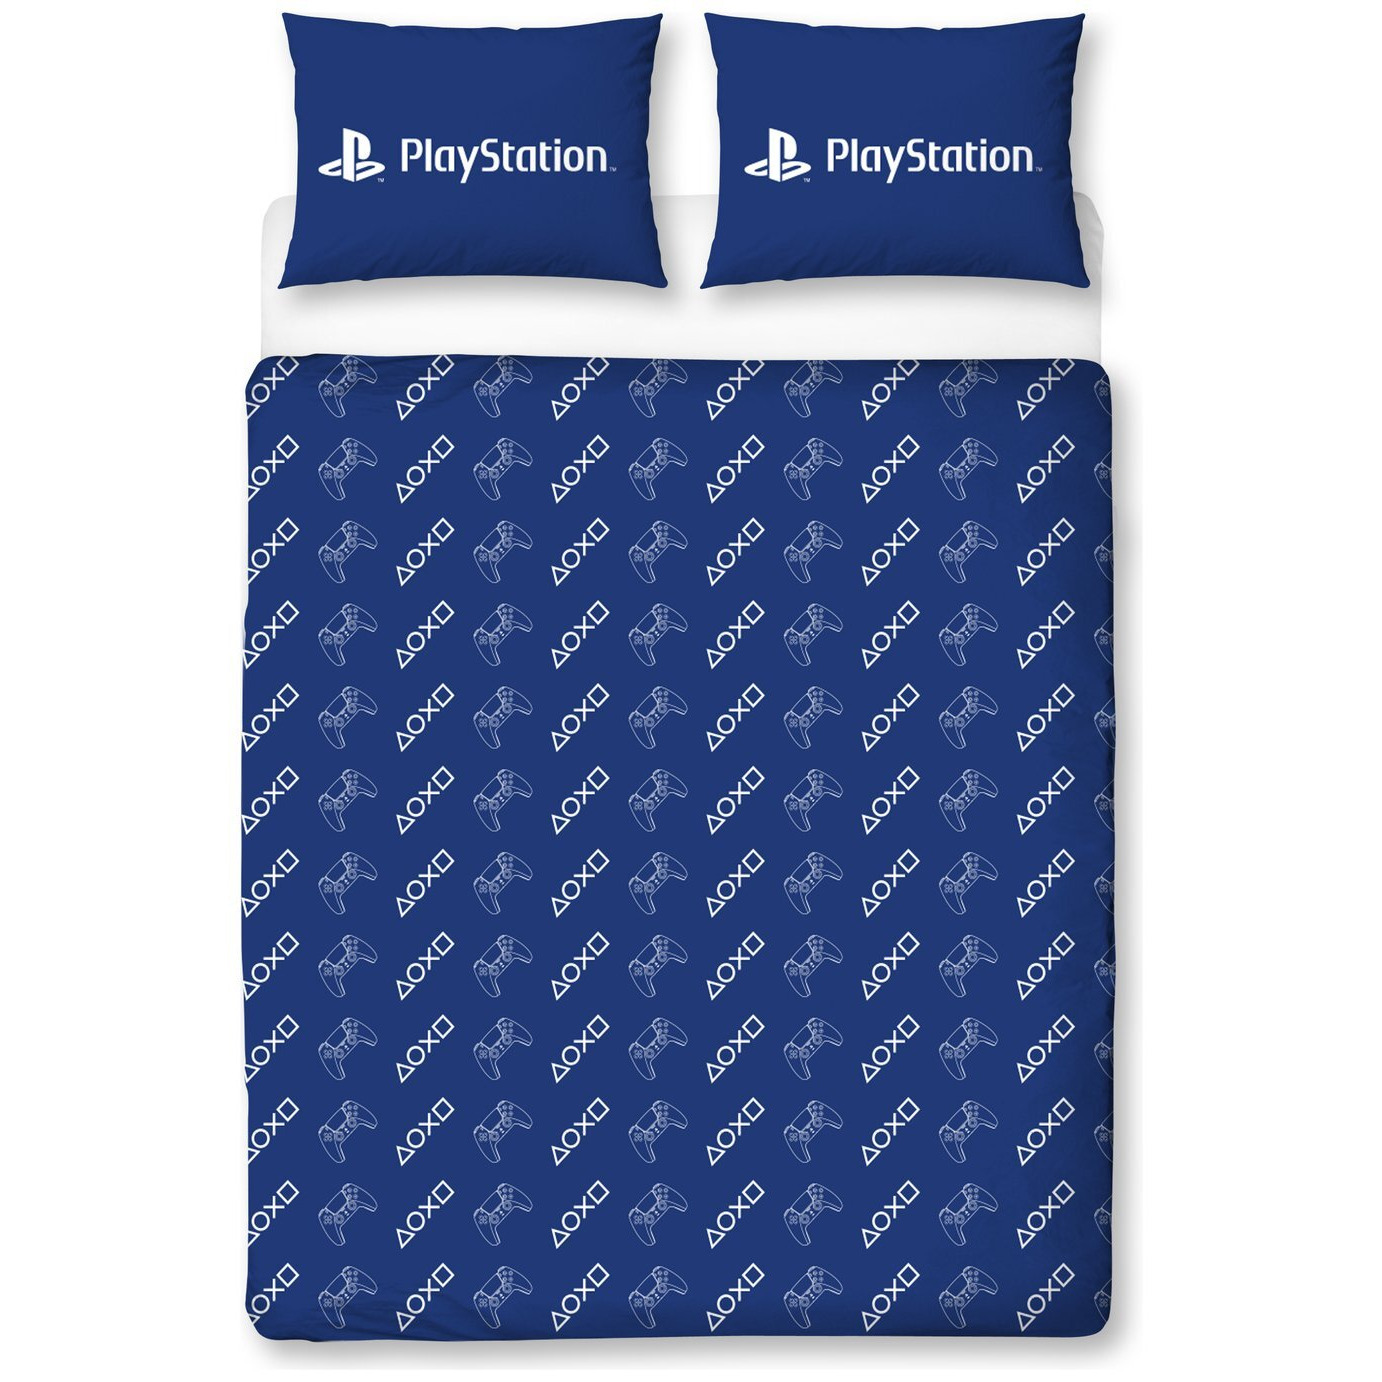 PlayStation Playerone Blue Kids Bedding Set - Single - image 1